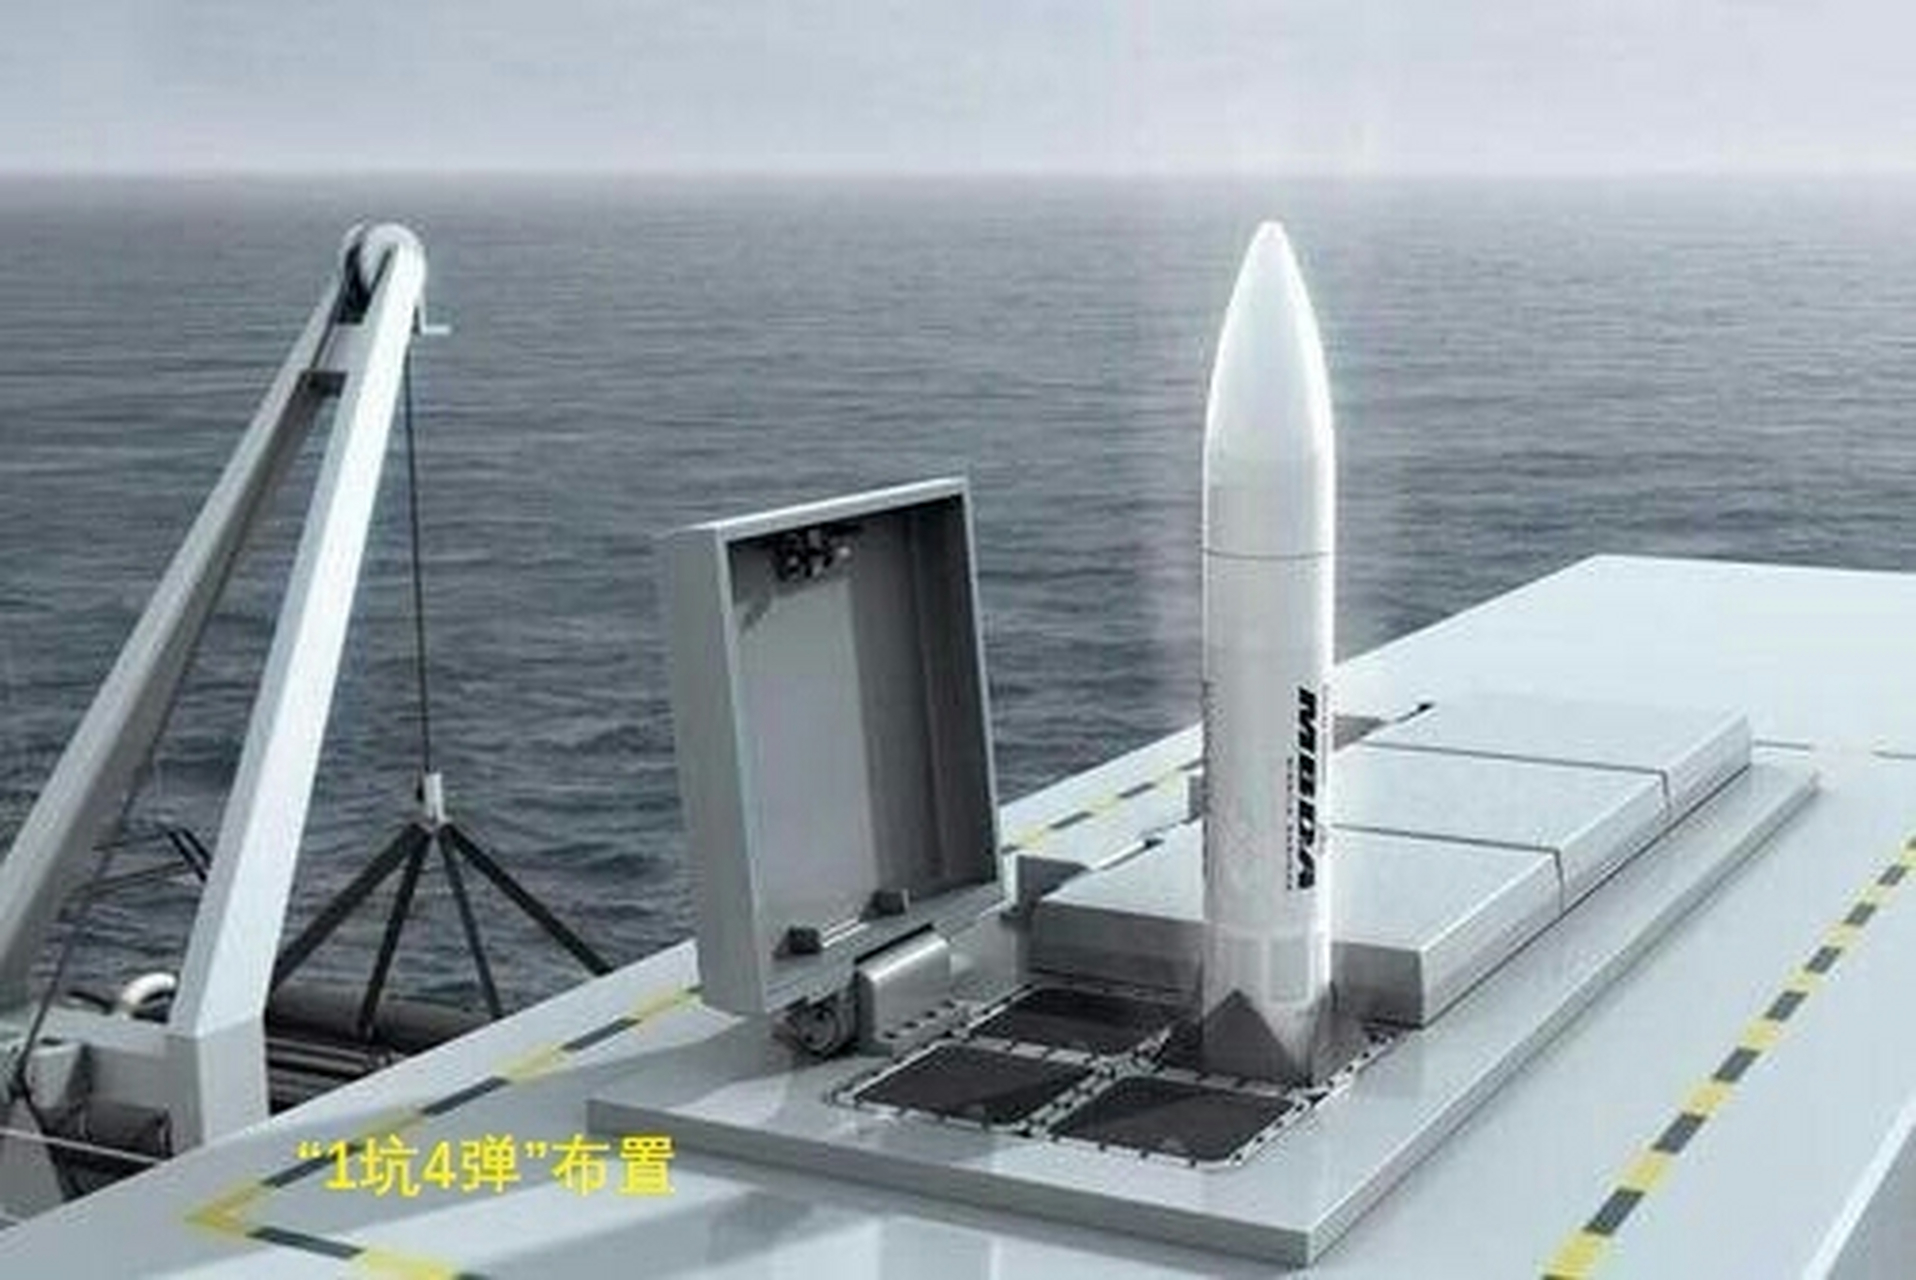 fm3000和dk10两款防空导弹都可以在稍改进之后在军舰垂发上实现"一坑